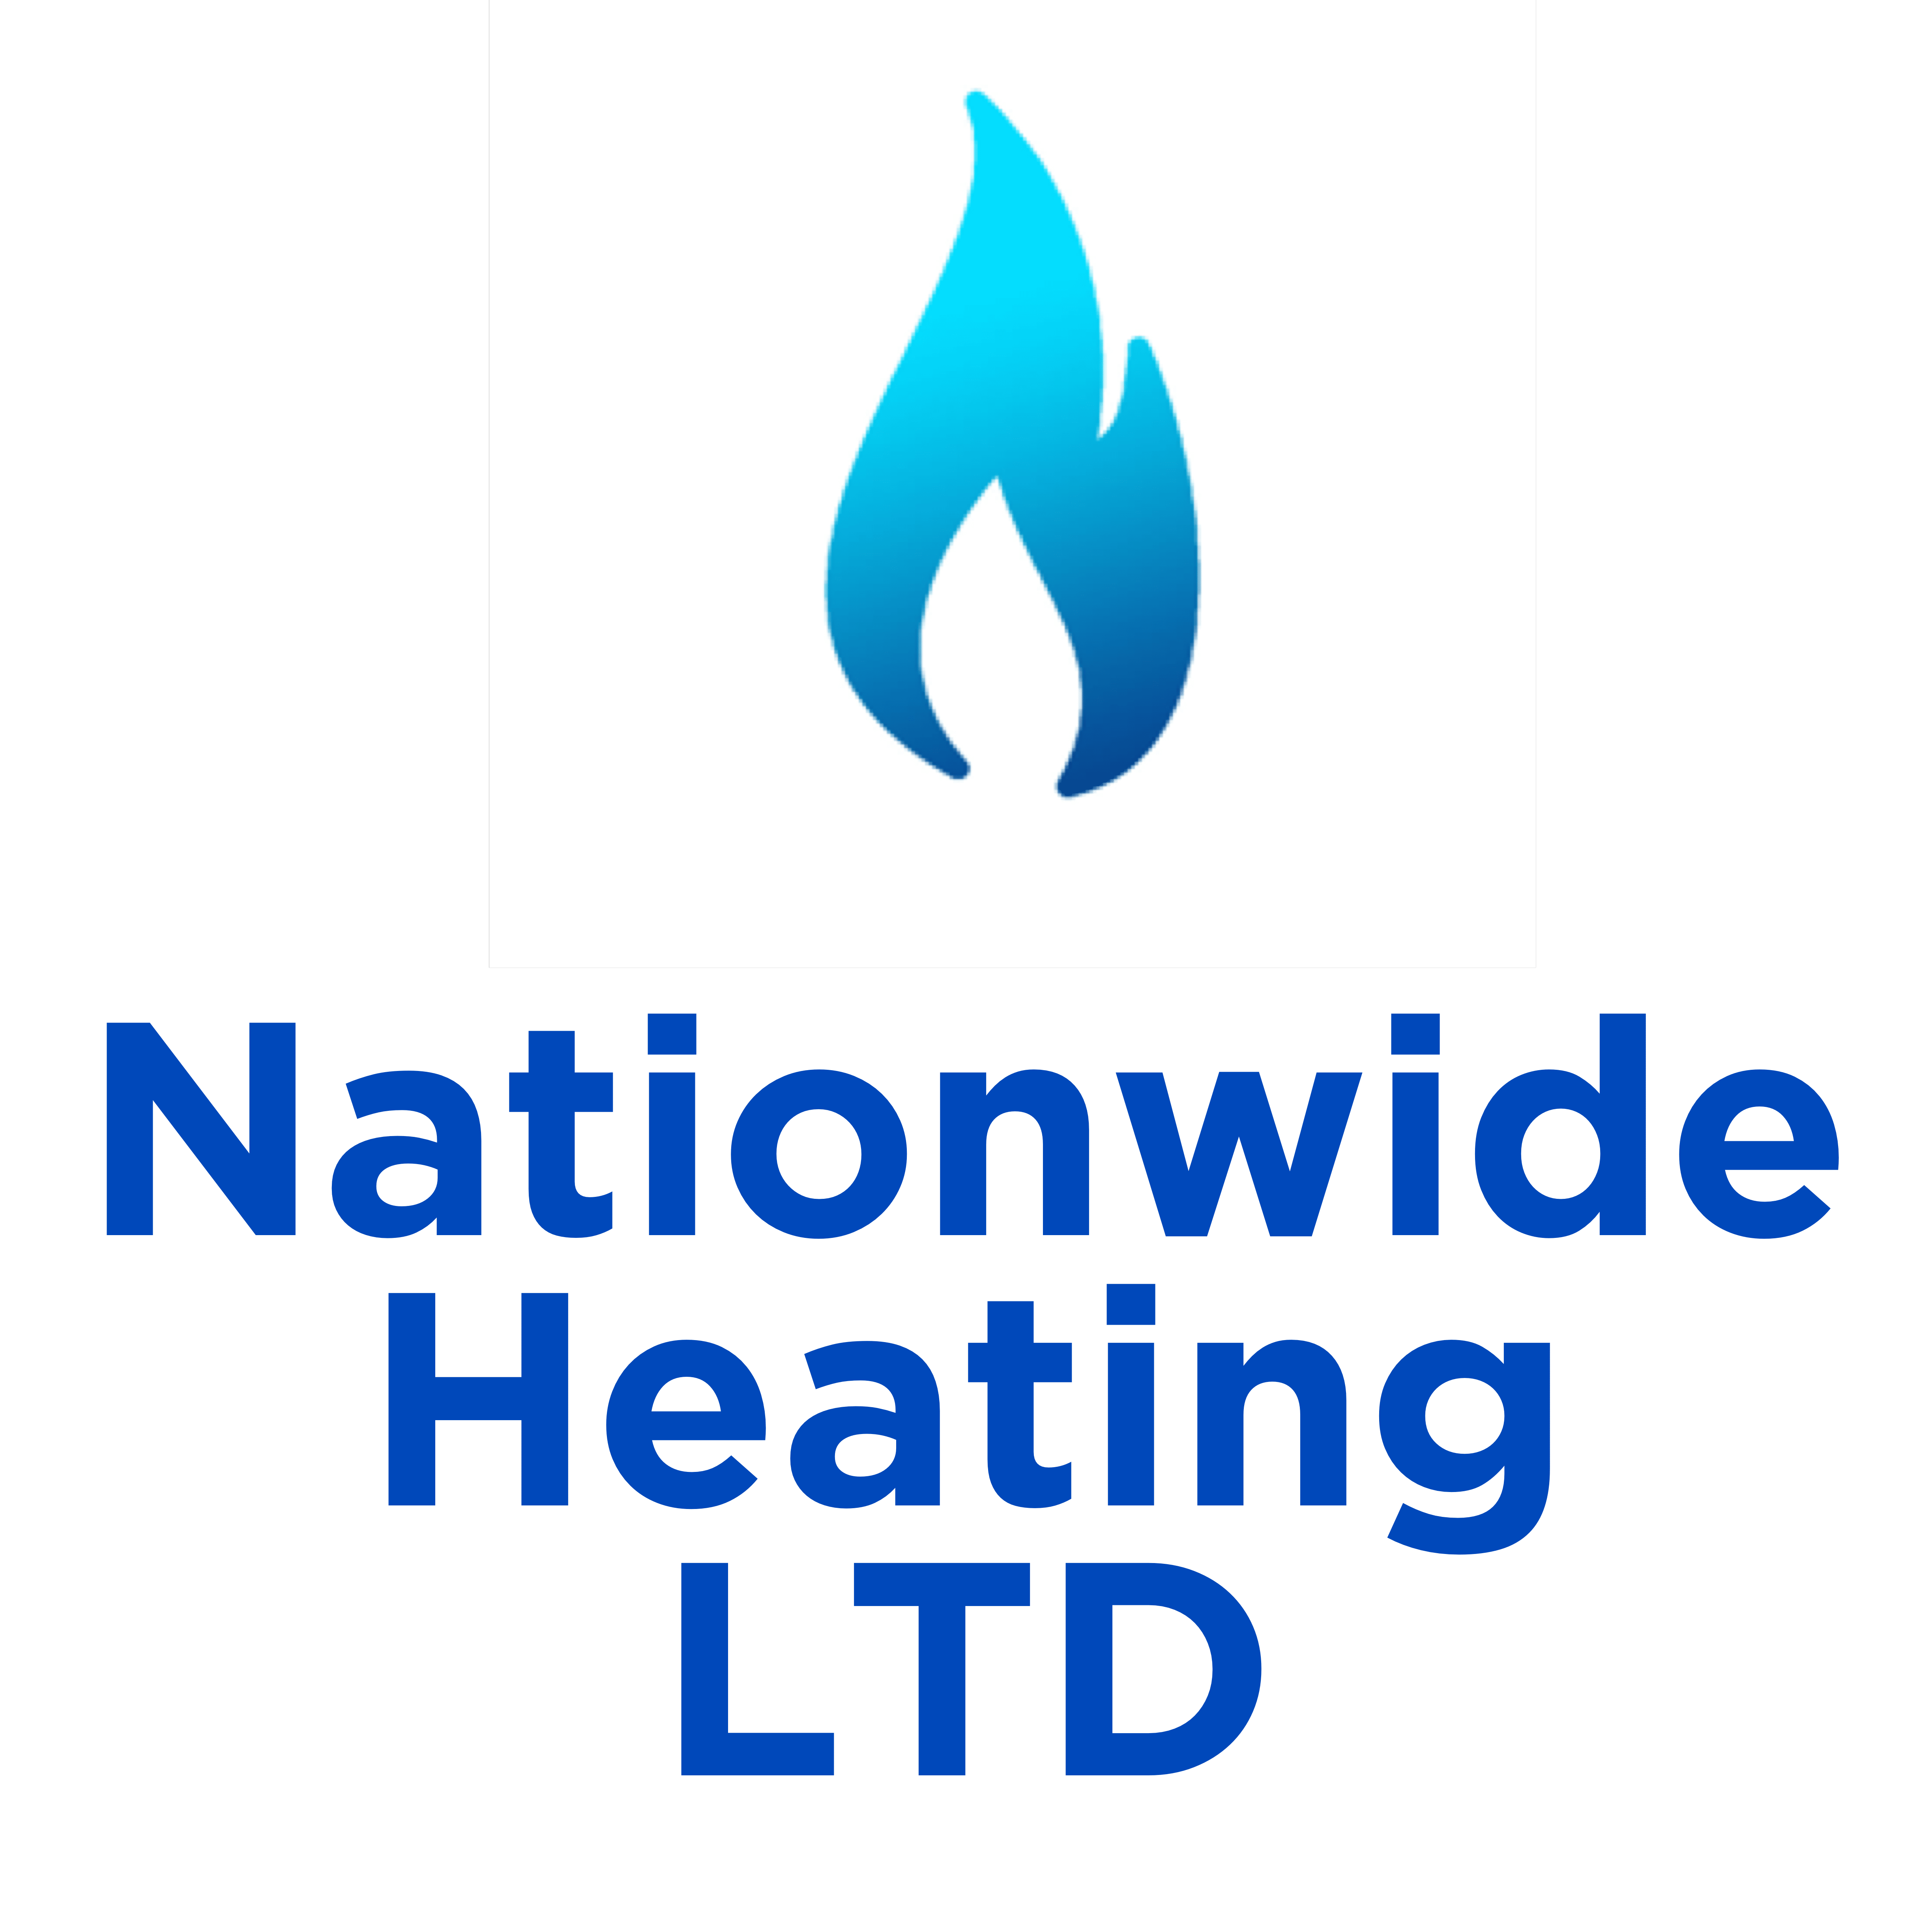 Nationwide Heating Ltd